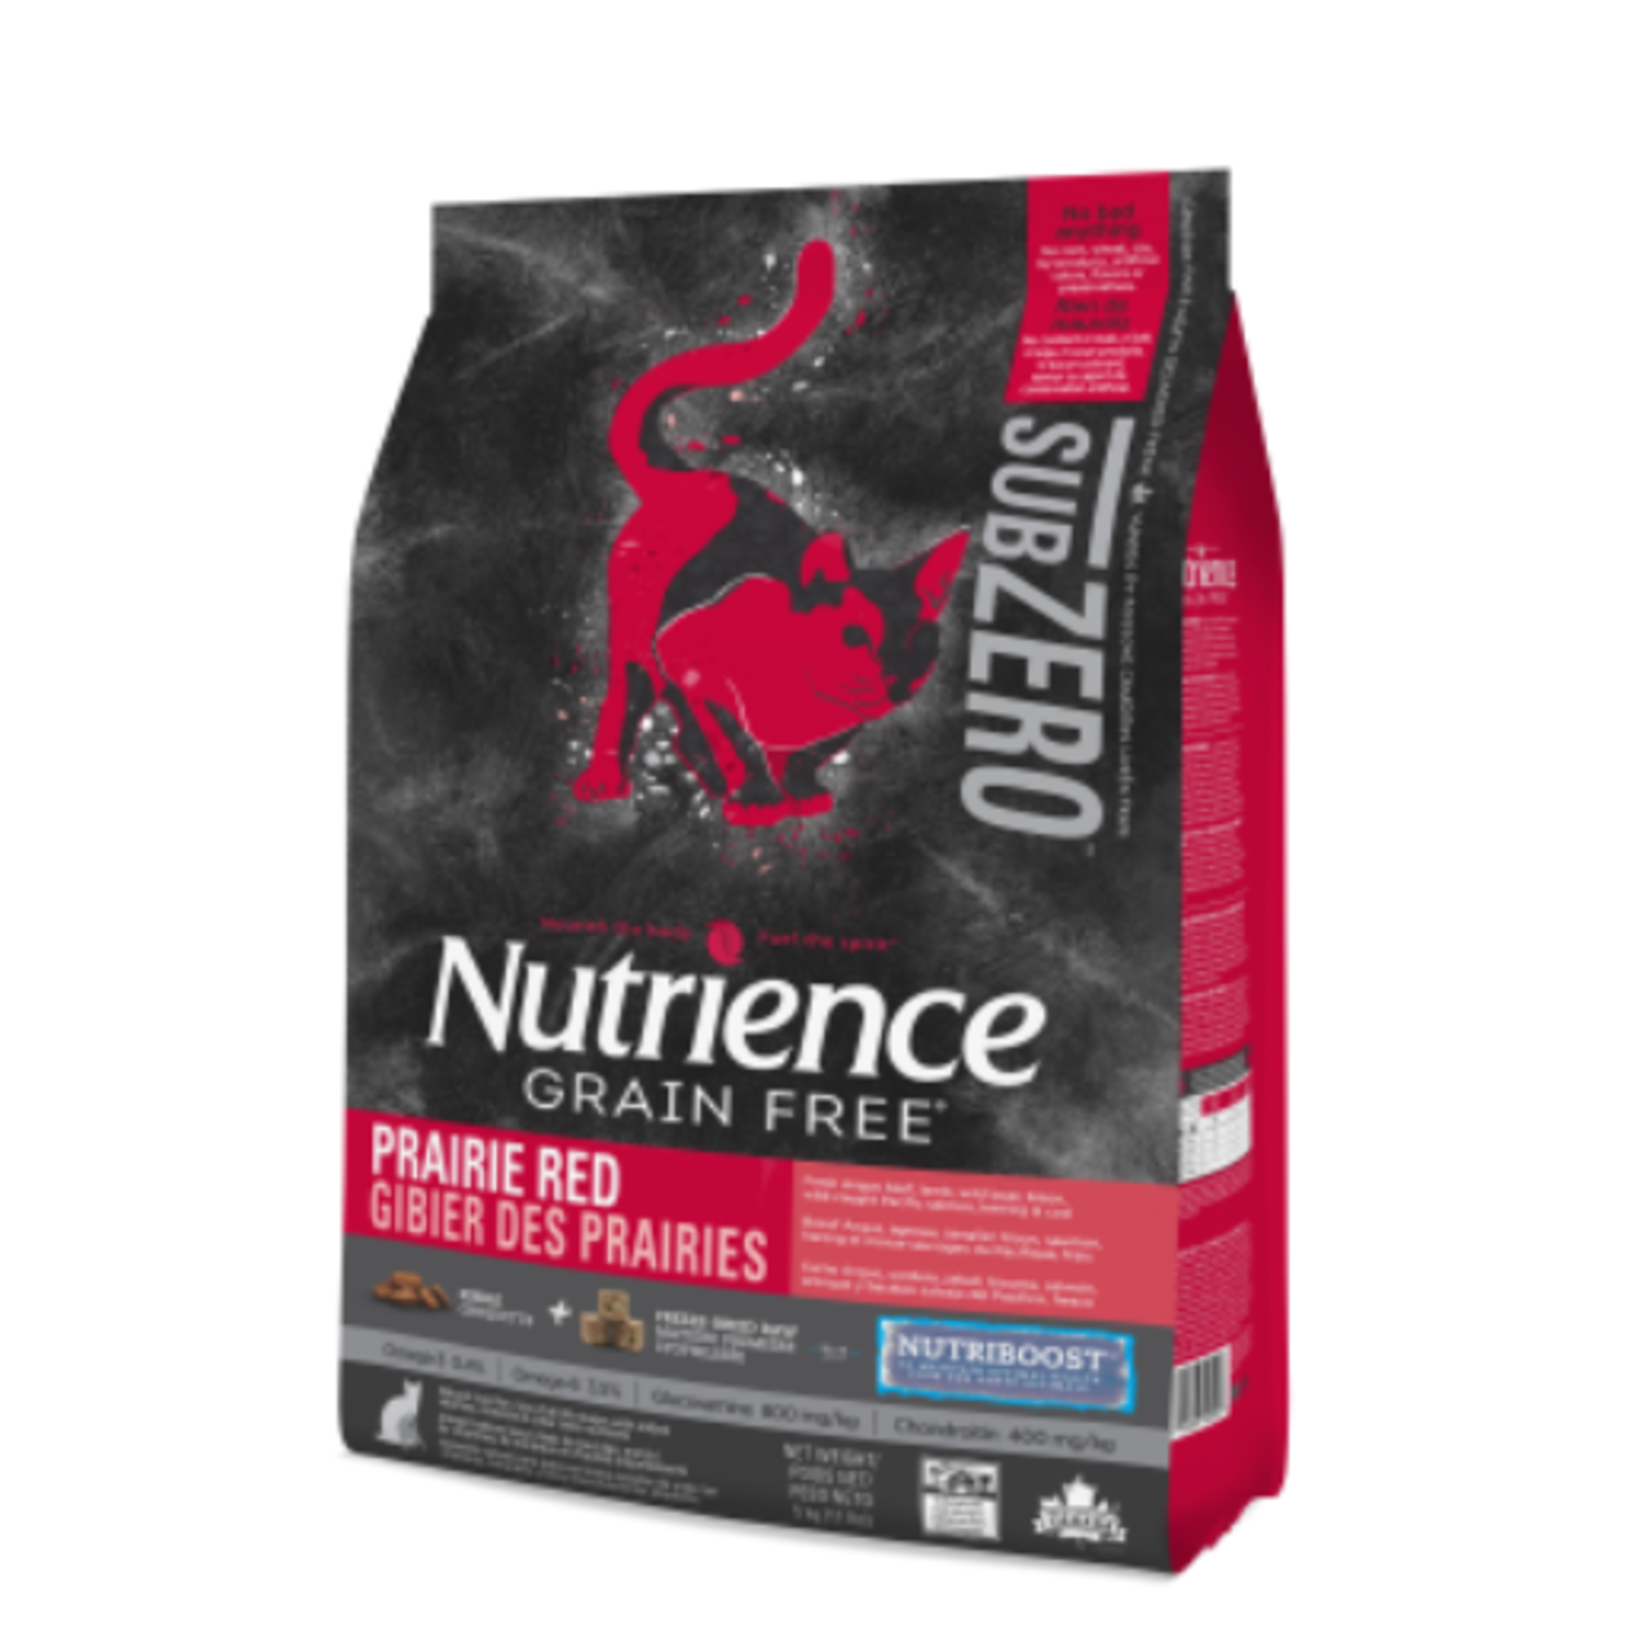 Nutrience Subzero - G free - Prairie Red - 11 lbs